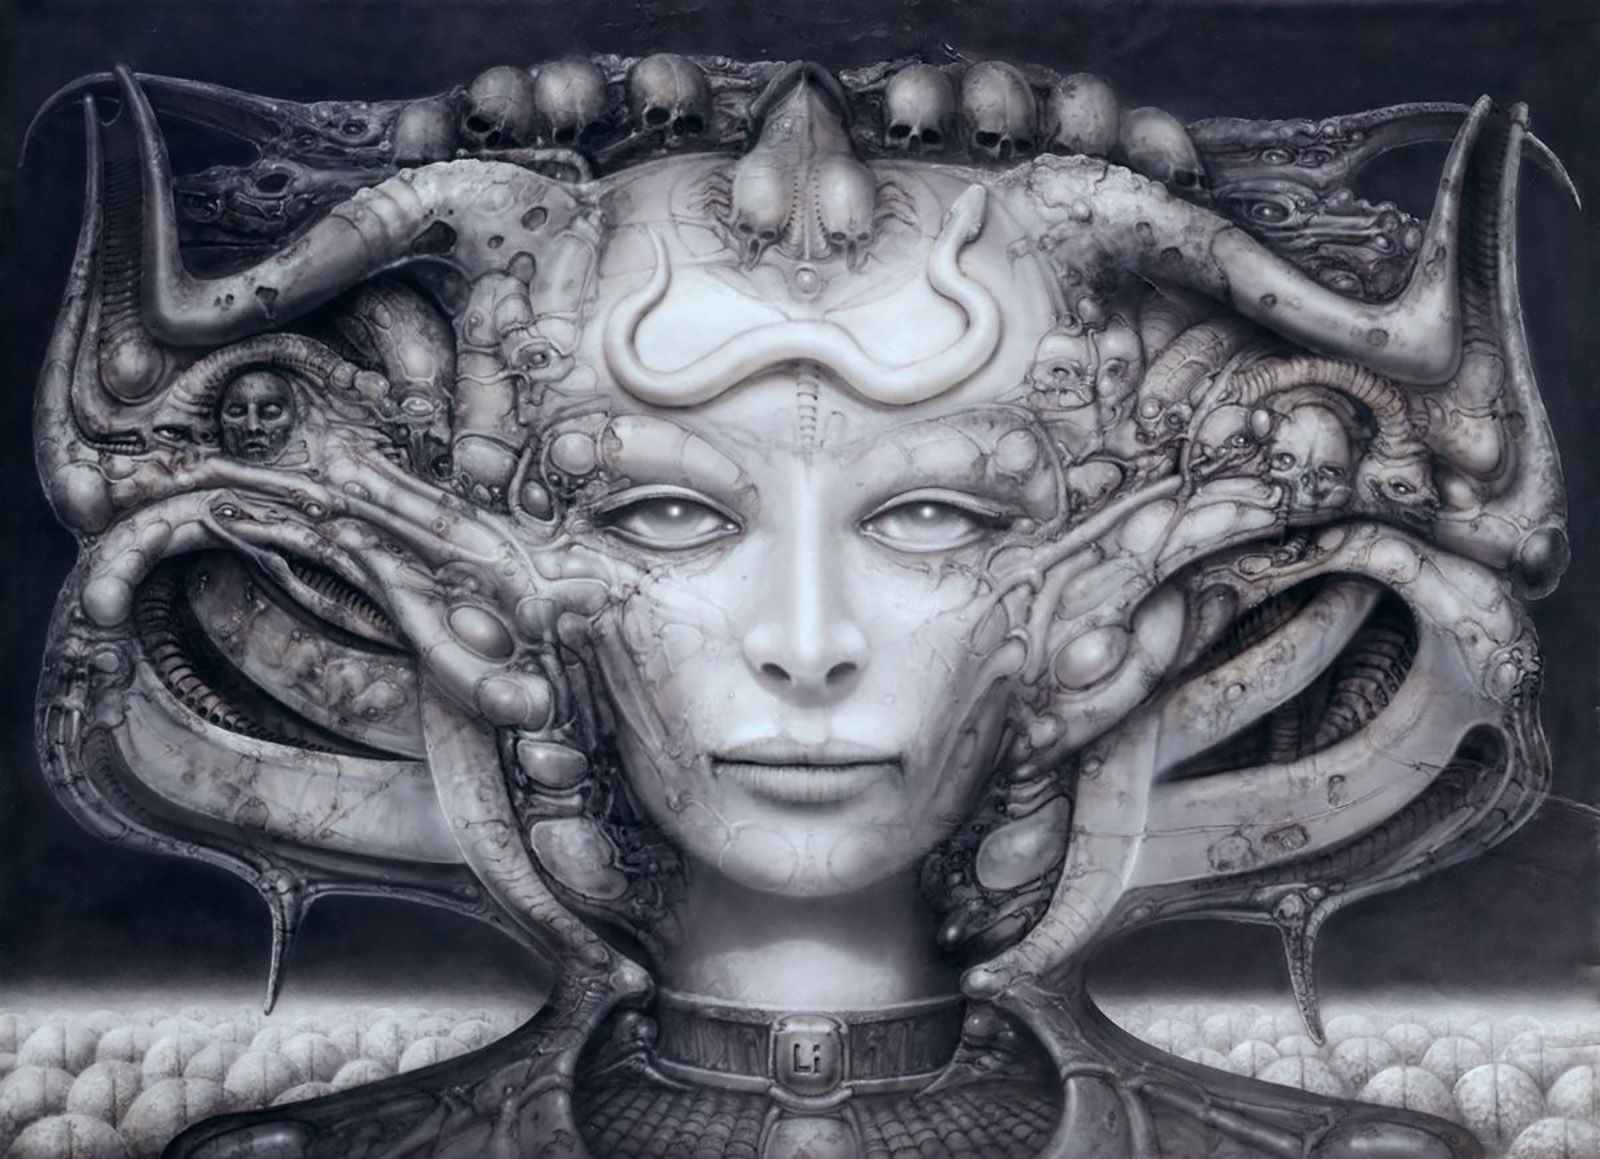 The nightmarish works of H.R. Giger, the artist behind 'Alien